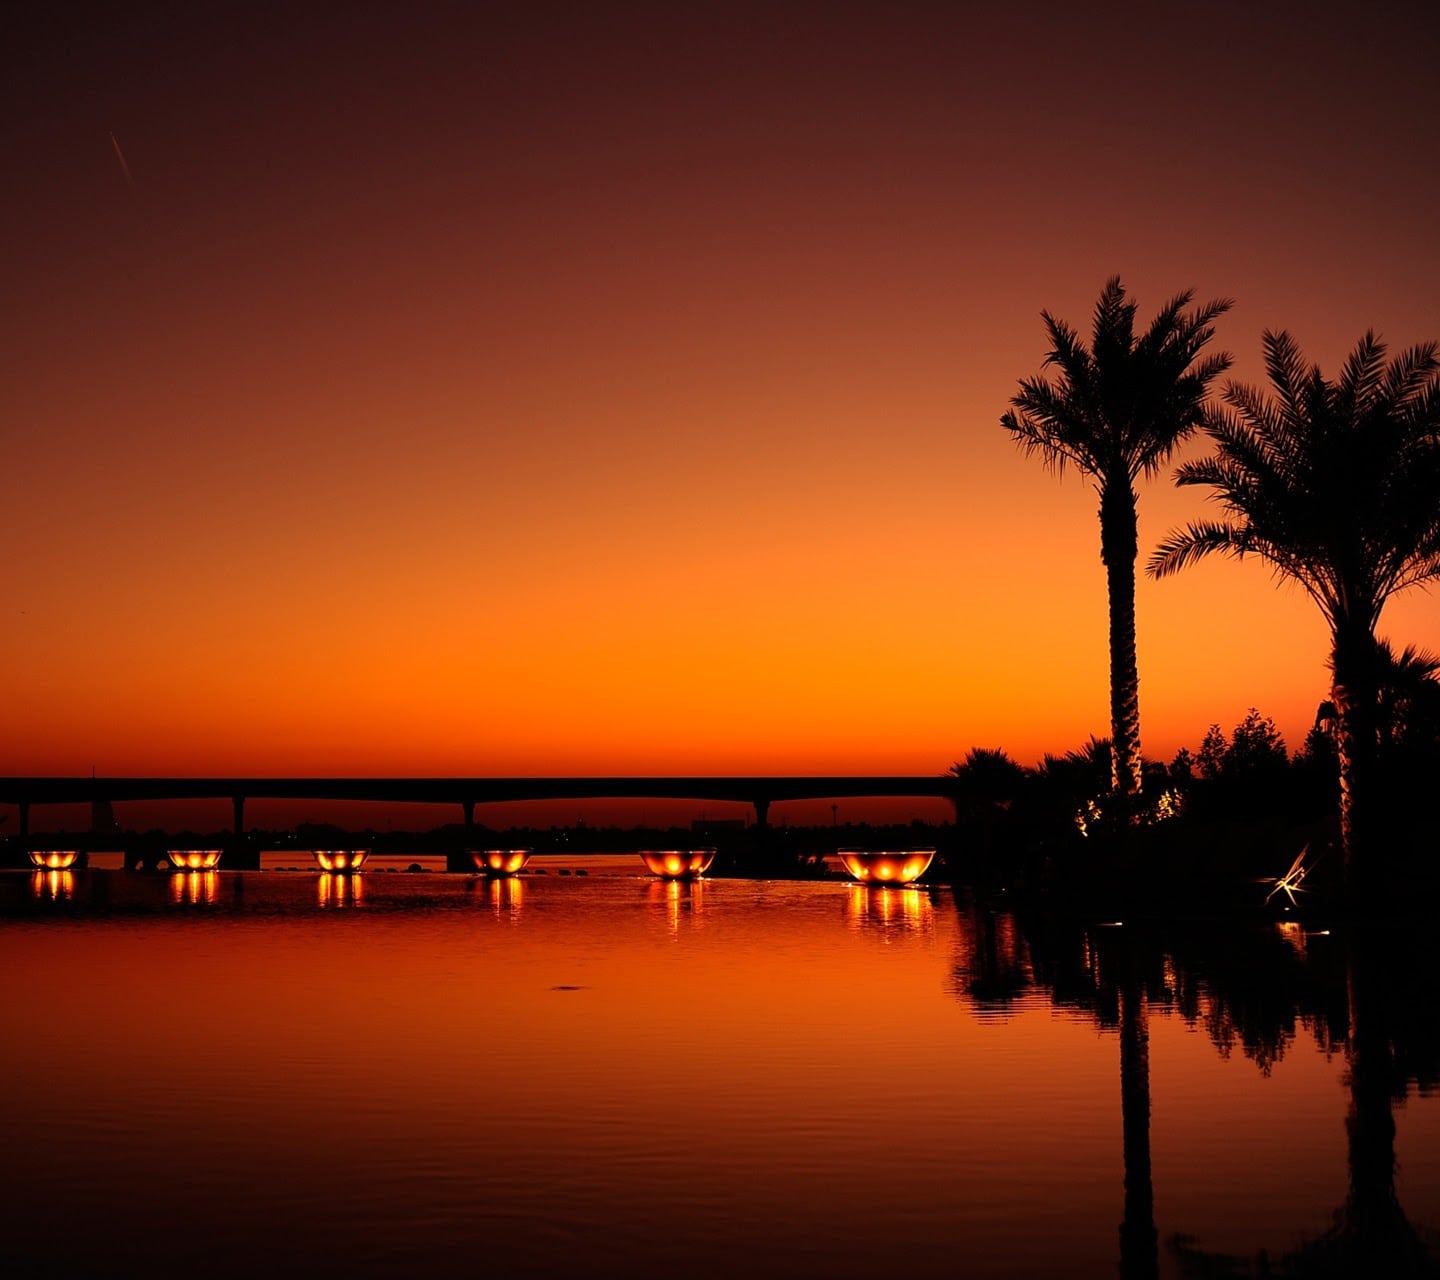 Dubai_Sunset-wallpaper-11180469